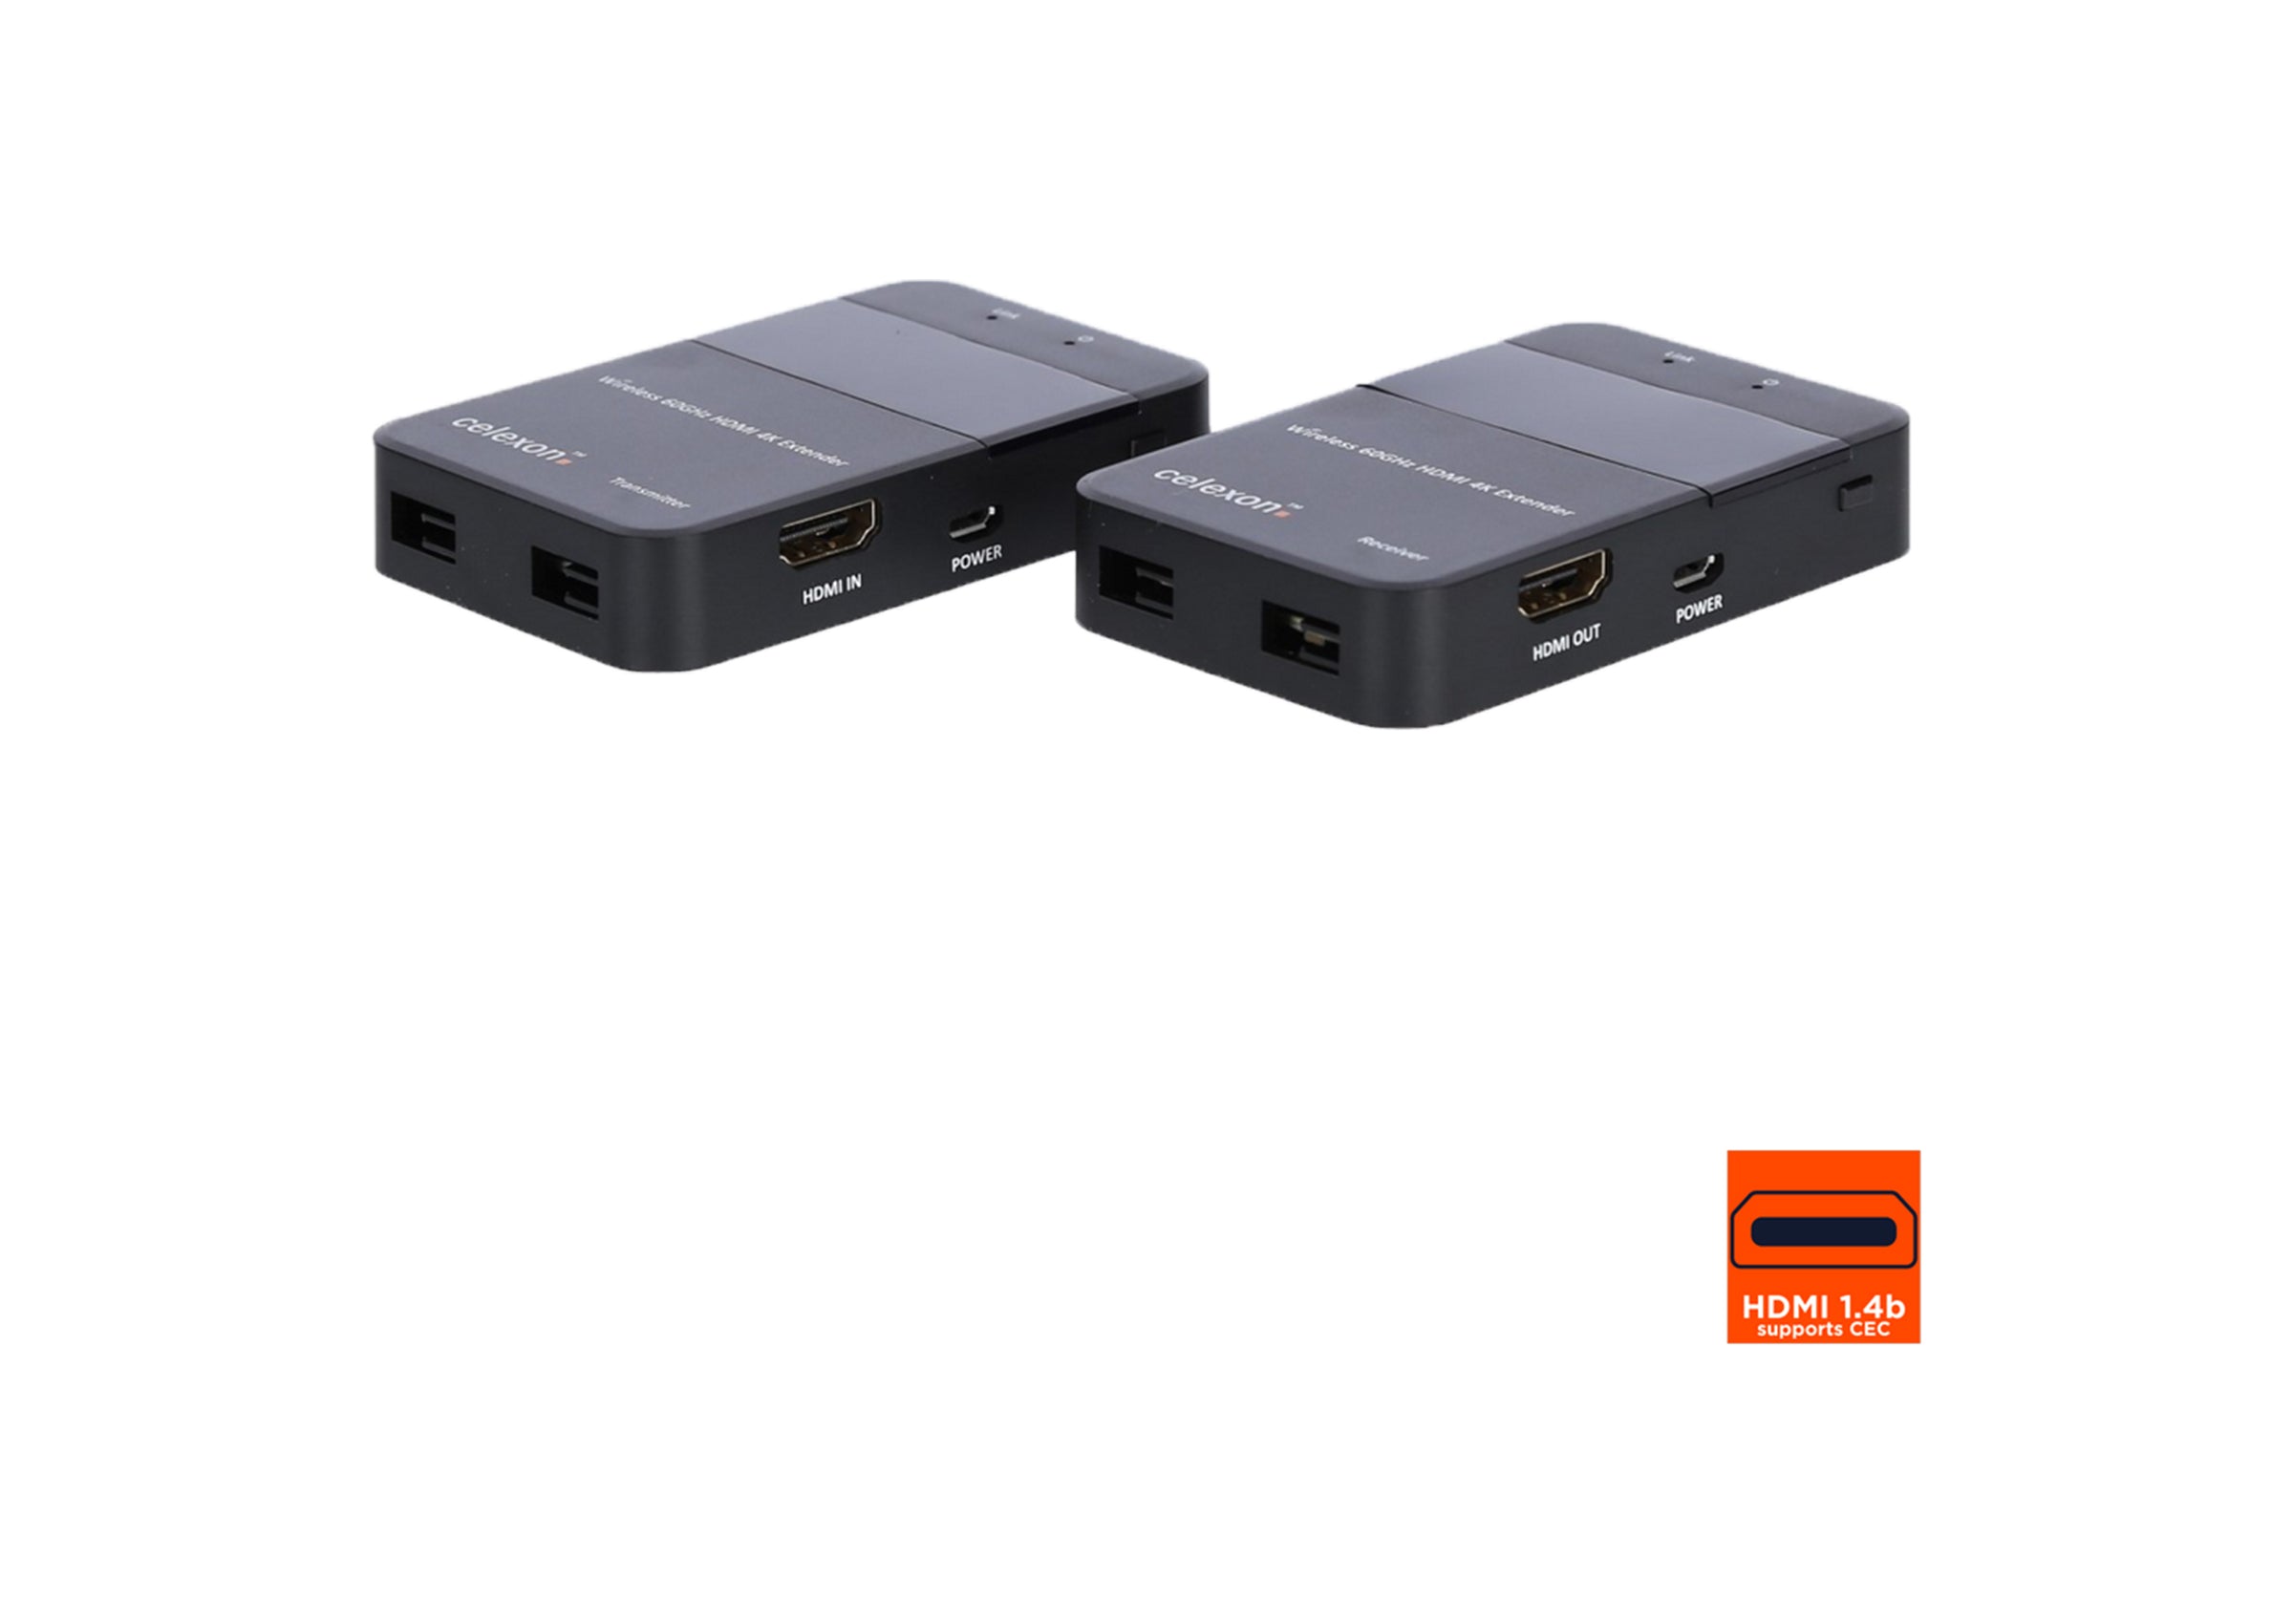 celexon Expert HDMI-Funk-Set WHD30M - 4K